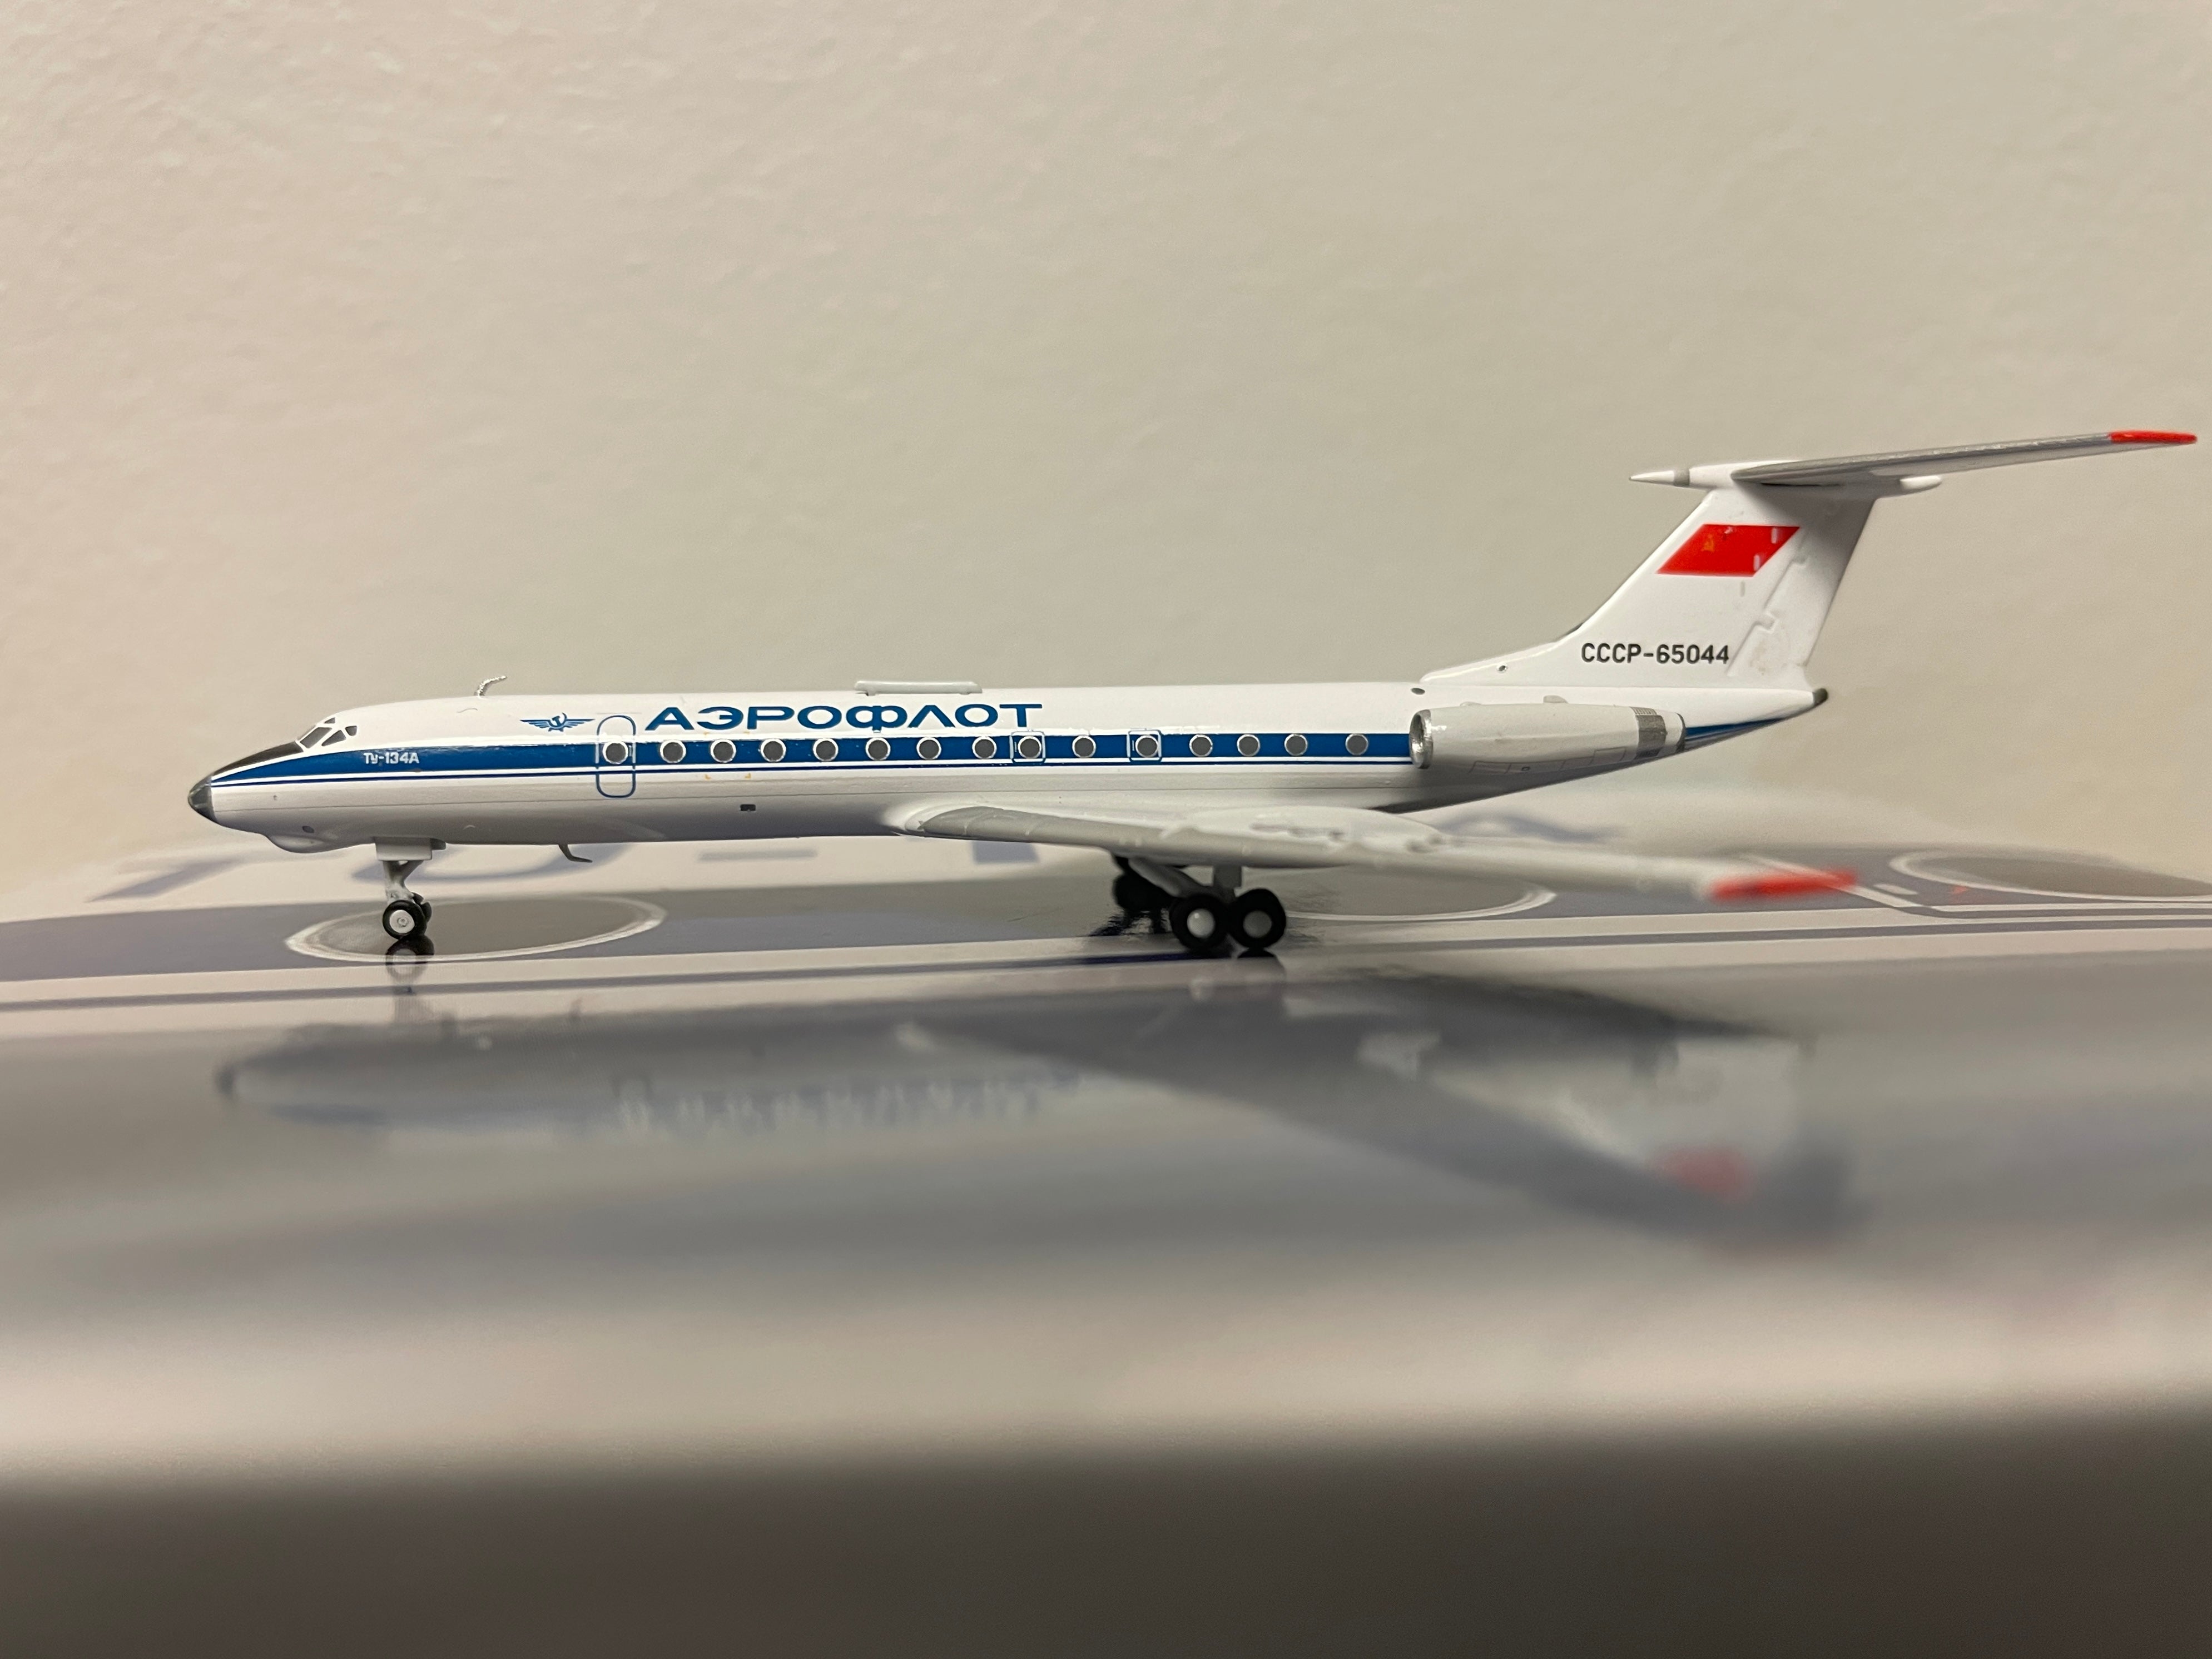 1:400 Panda Models Aeroflot Tupolev Tu-134 CCCP-65044 202108